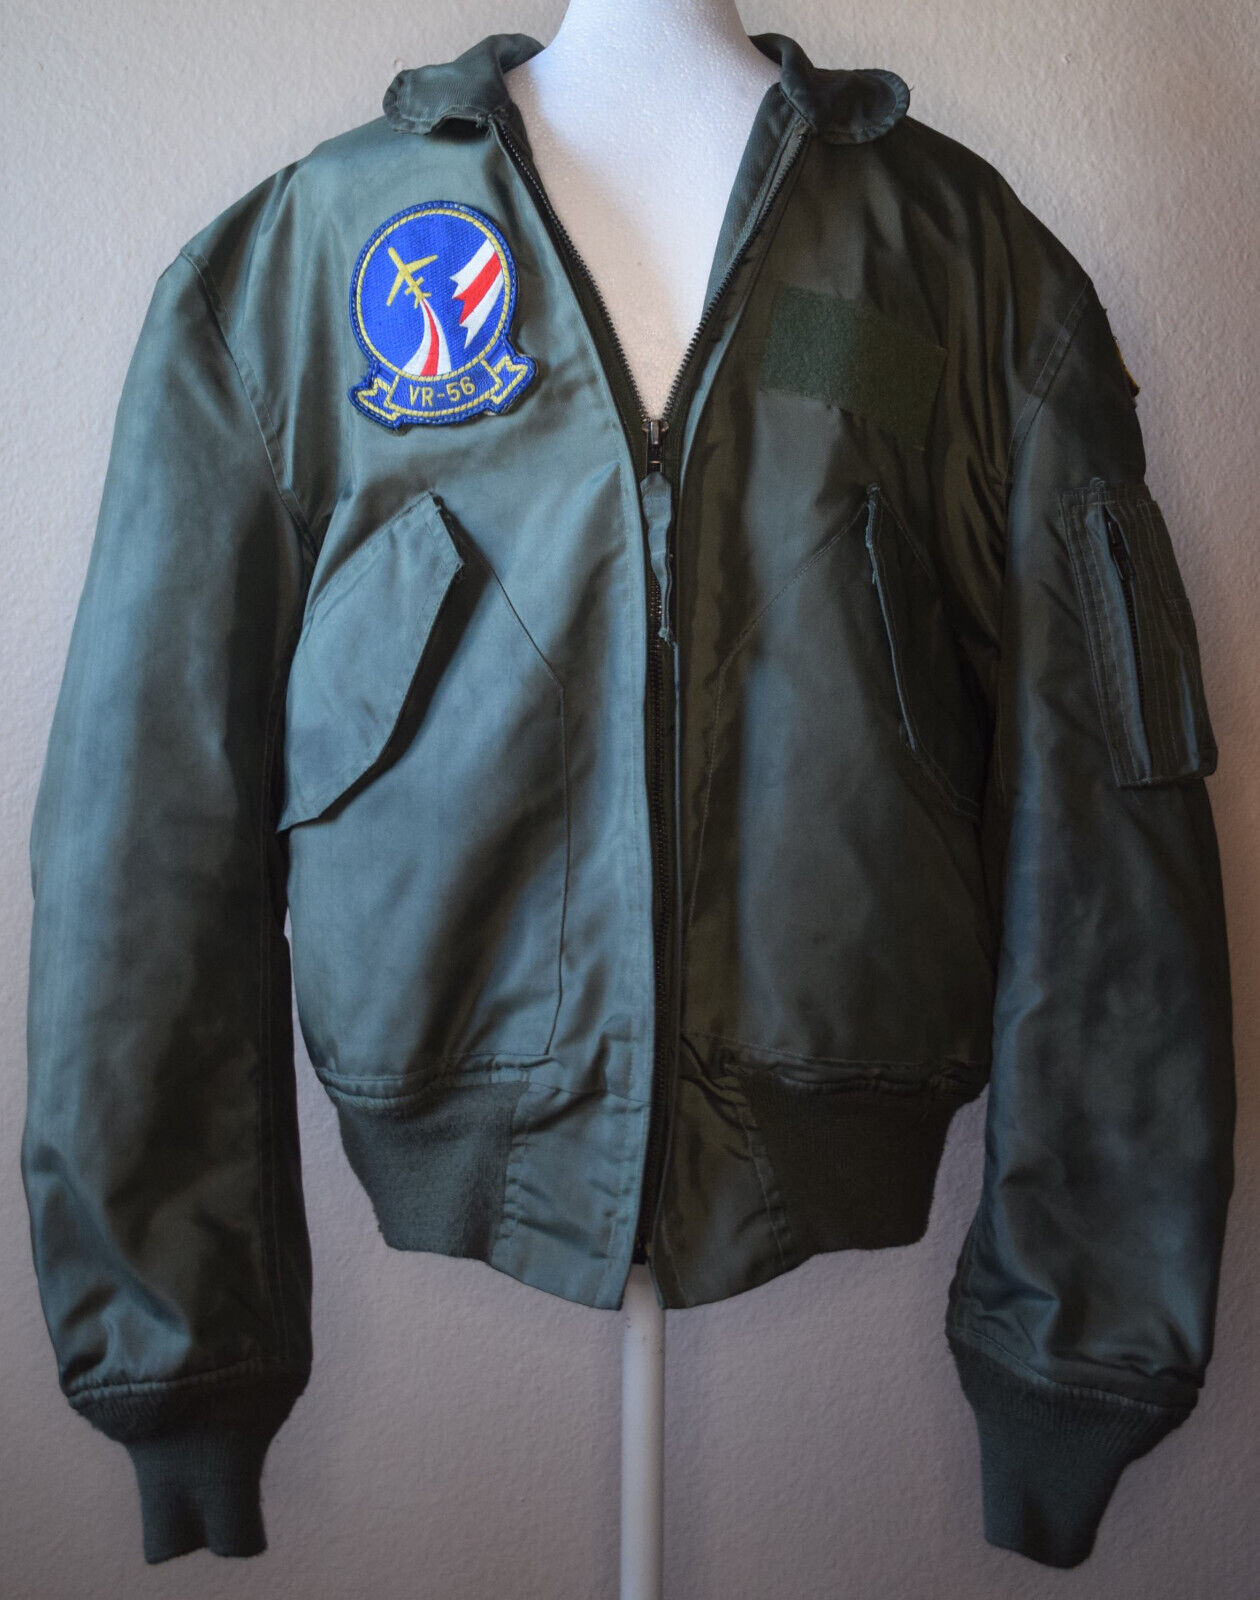 CWU-36/P vintage Flight Jacket Flyer\'s Mens Summer medium with VR-56 unit patch